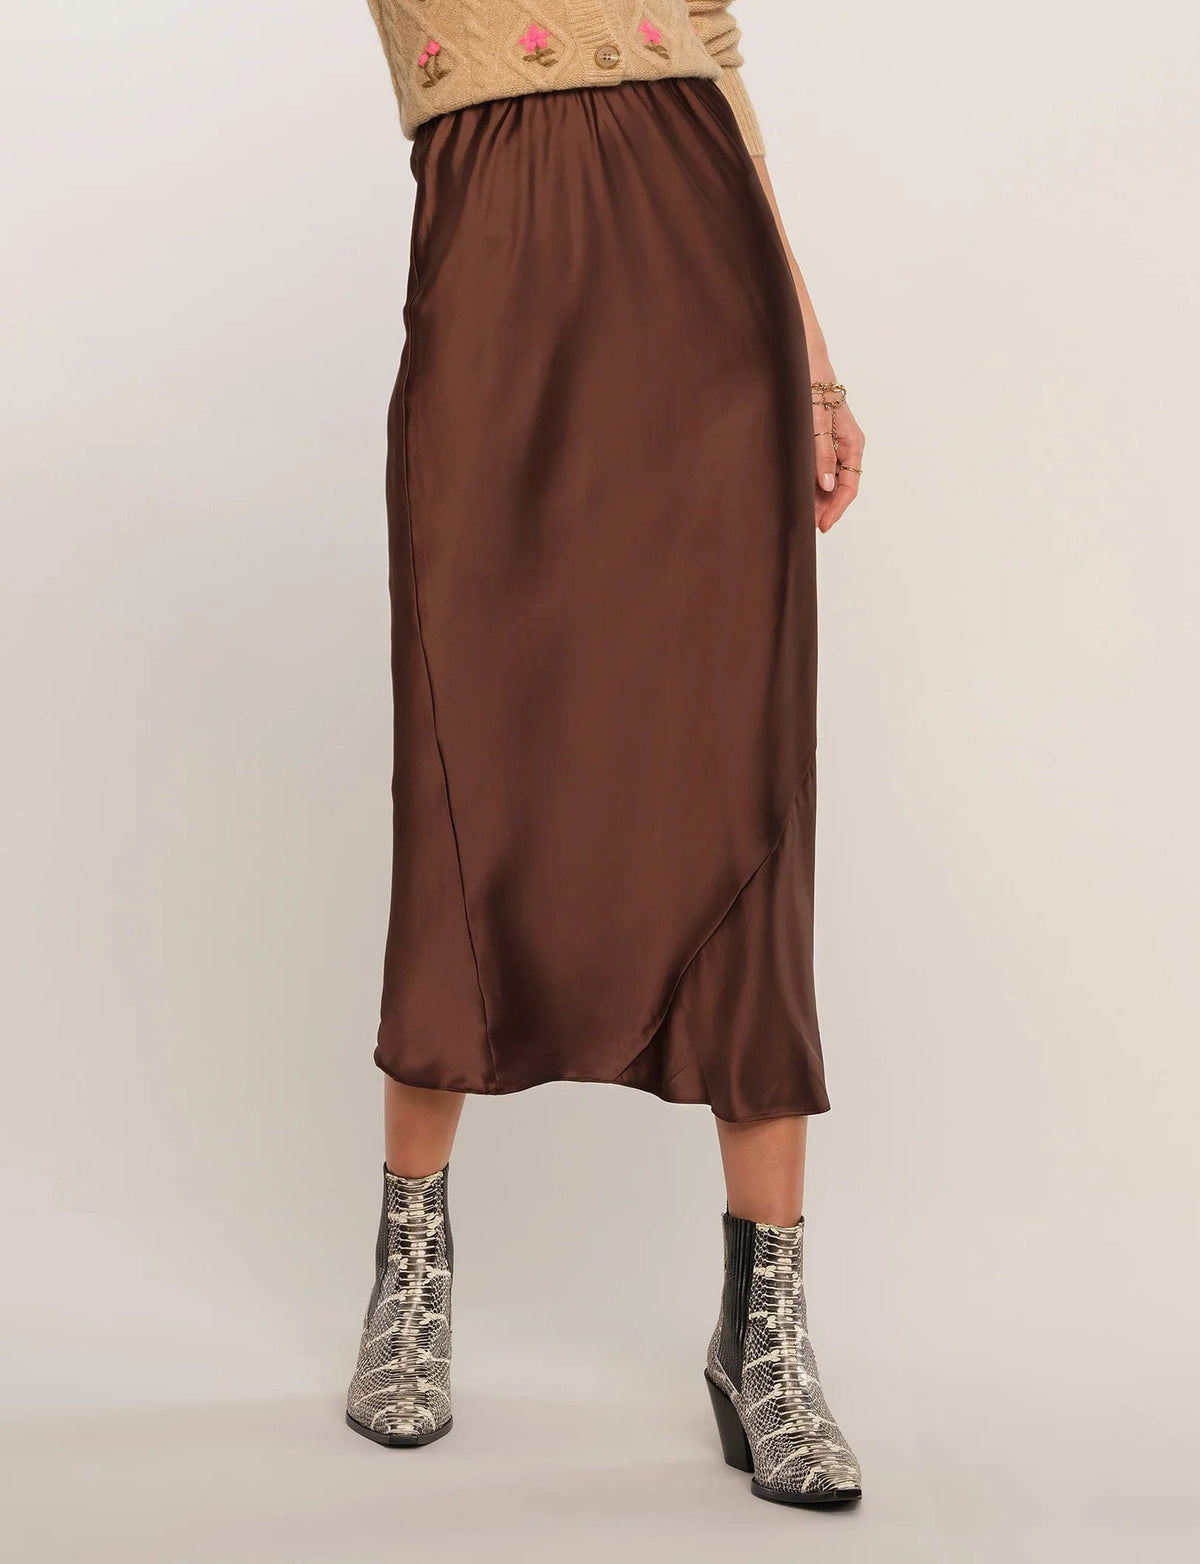 Satin Heartloom Sheridan Midi Skirt in Coco Brown